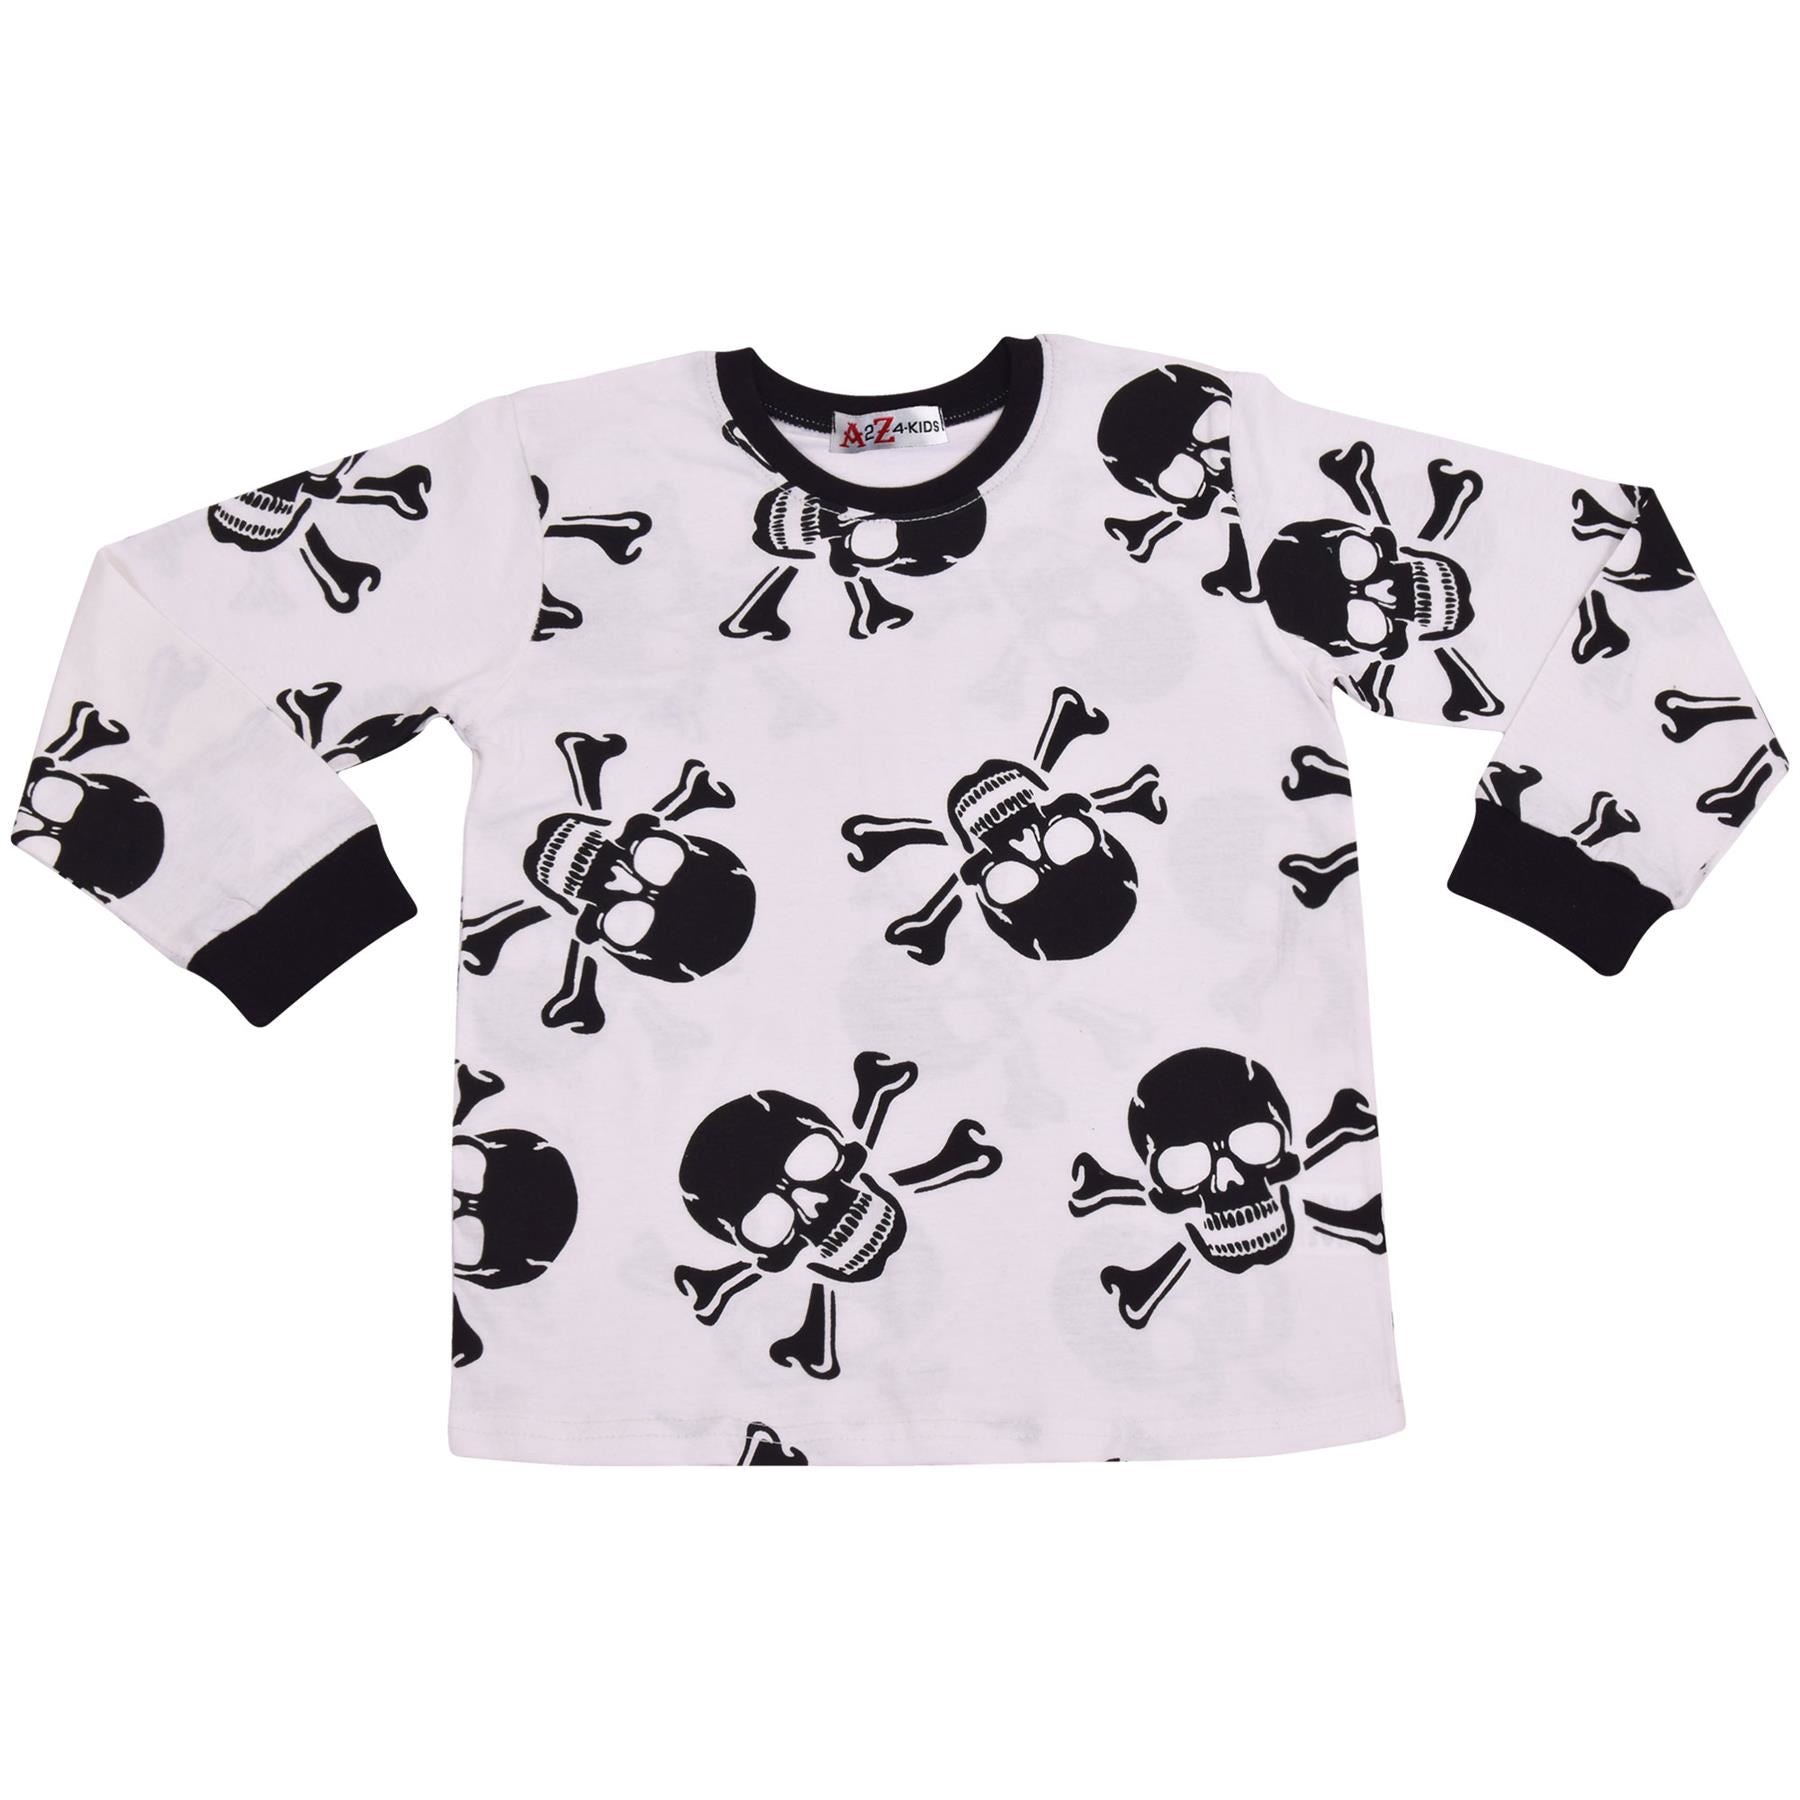 Kids Girls Boys Skull & Bones Print Pyjamas Set